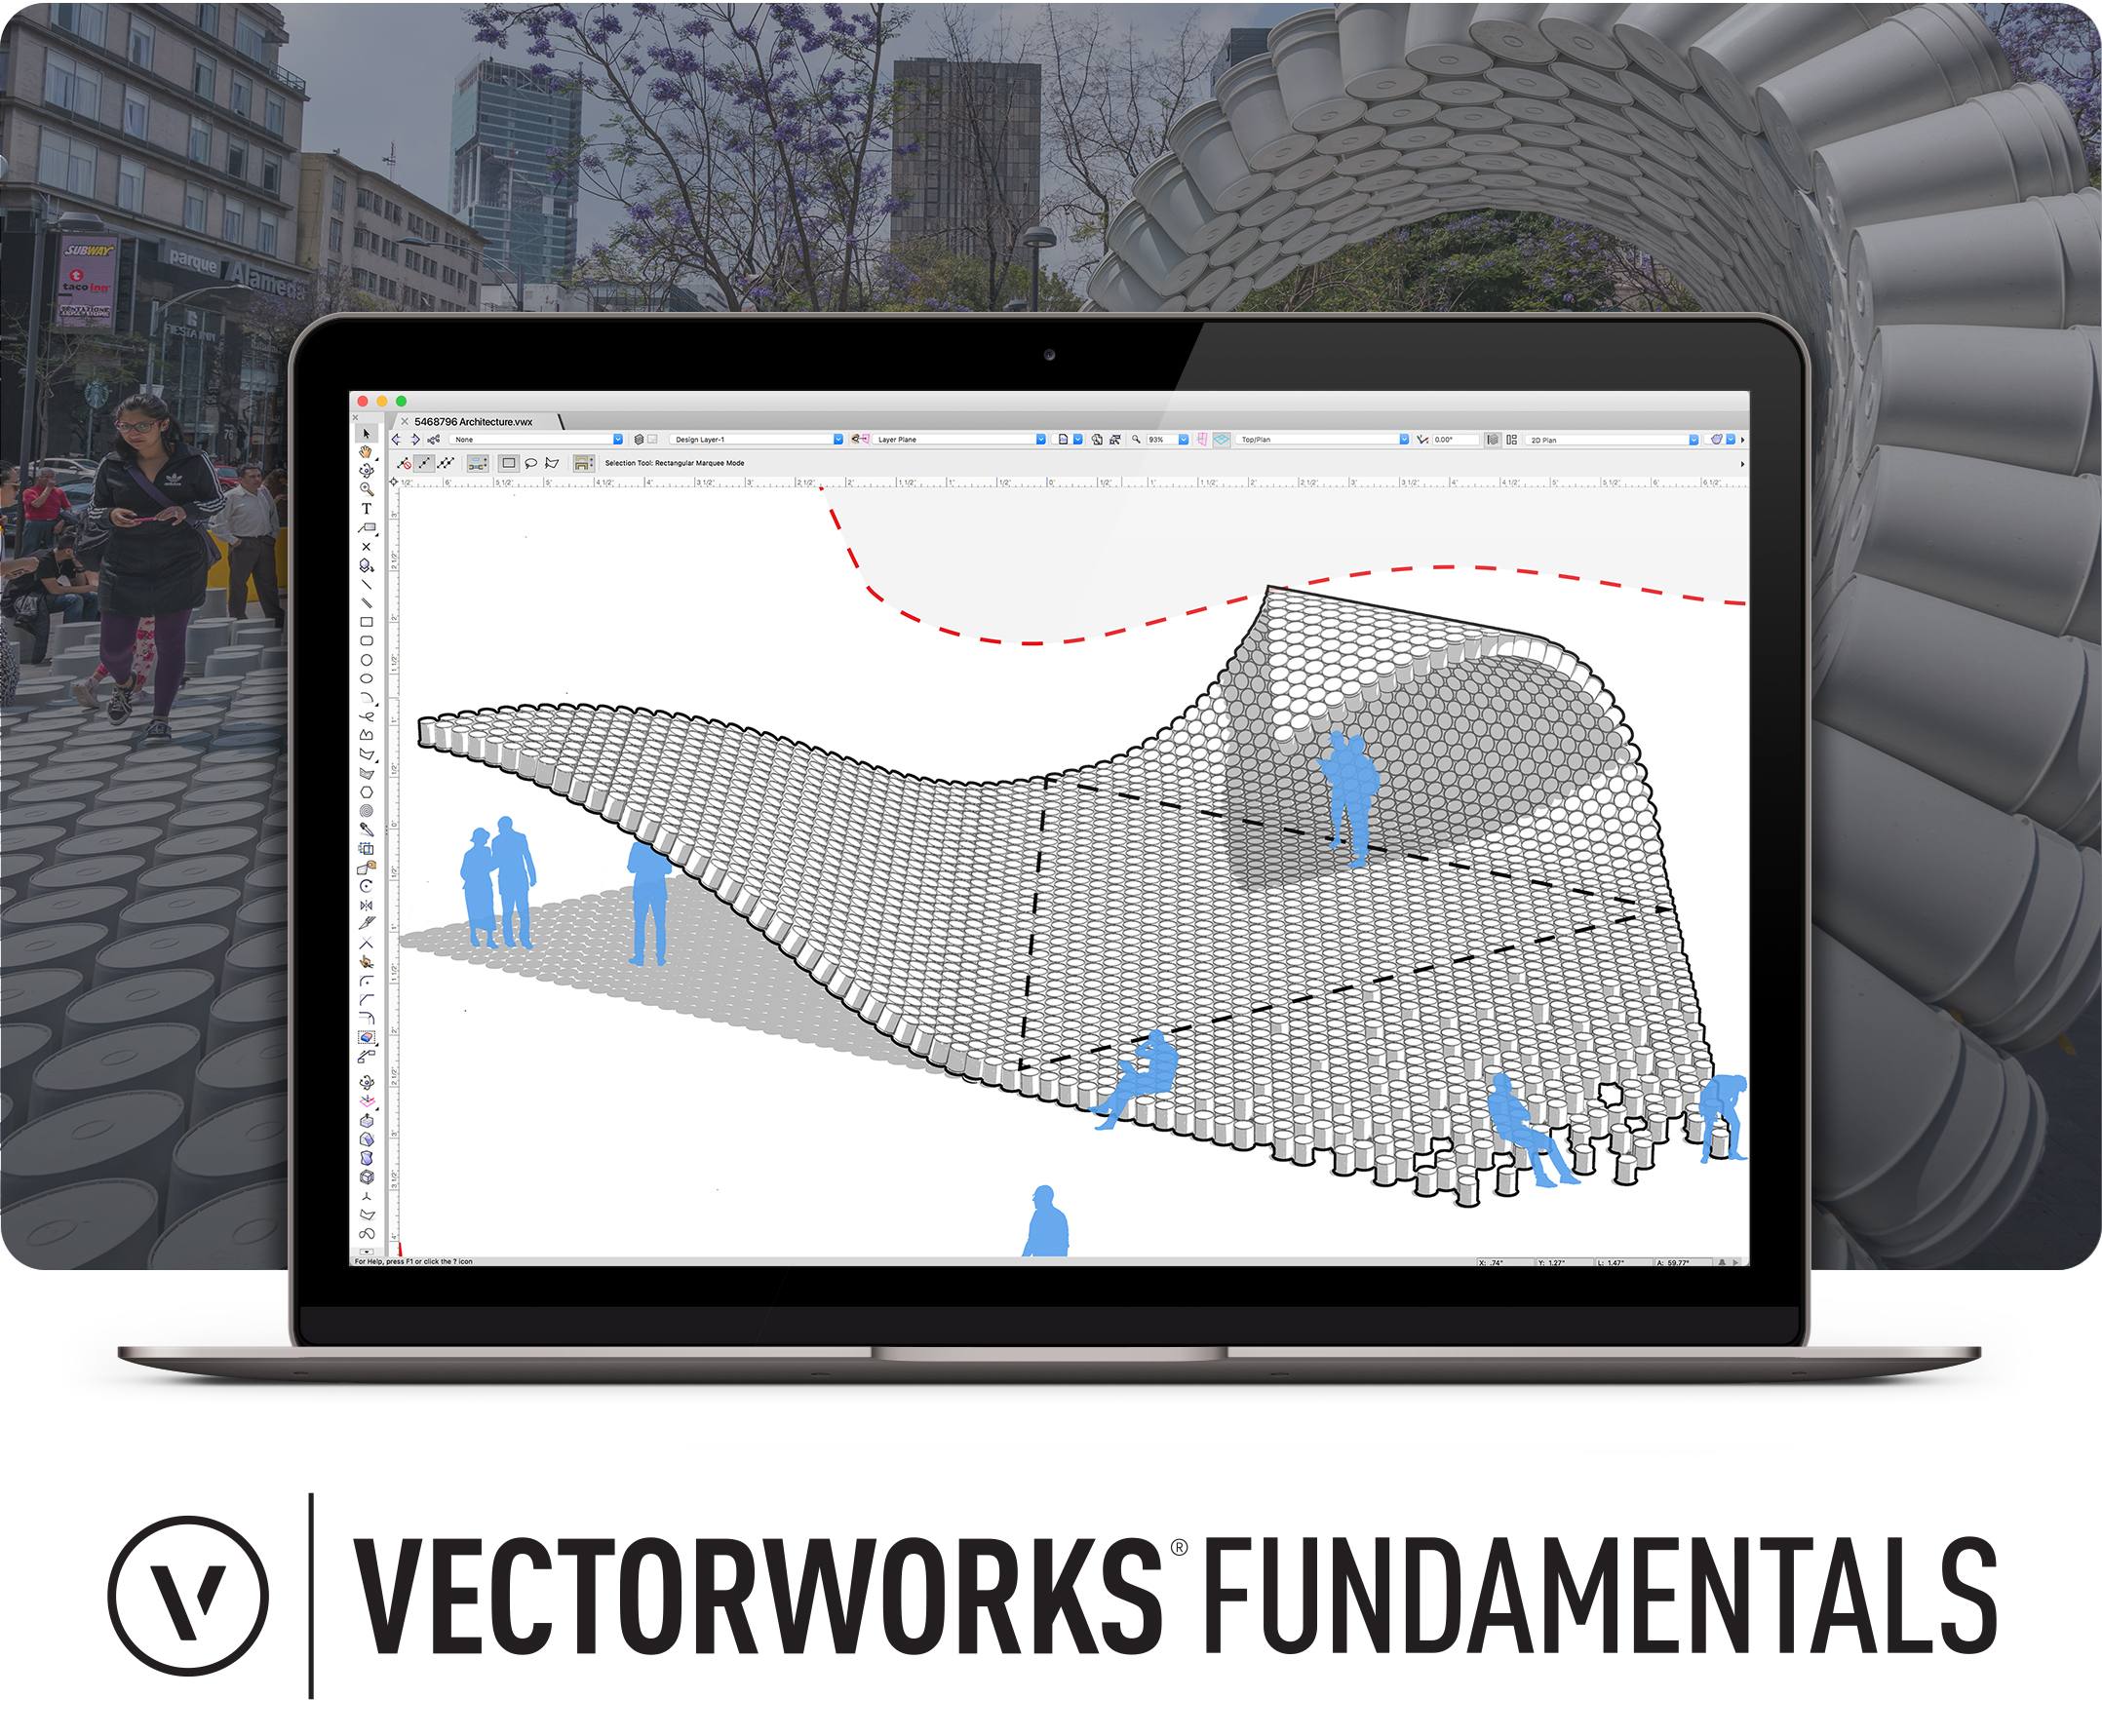 Vectorworks Fundamentals 2020 Getting Started Tutorial